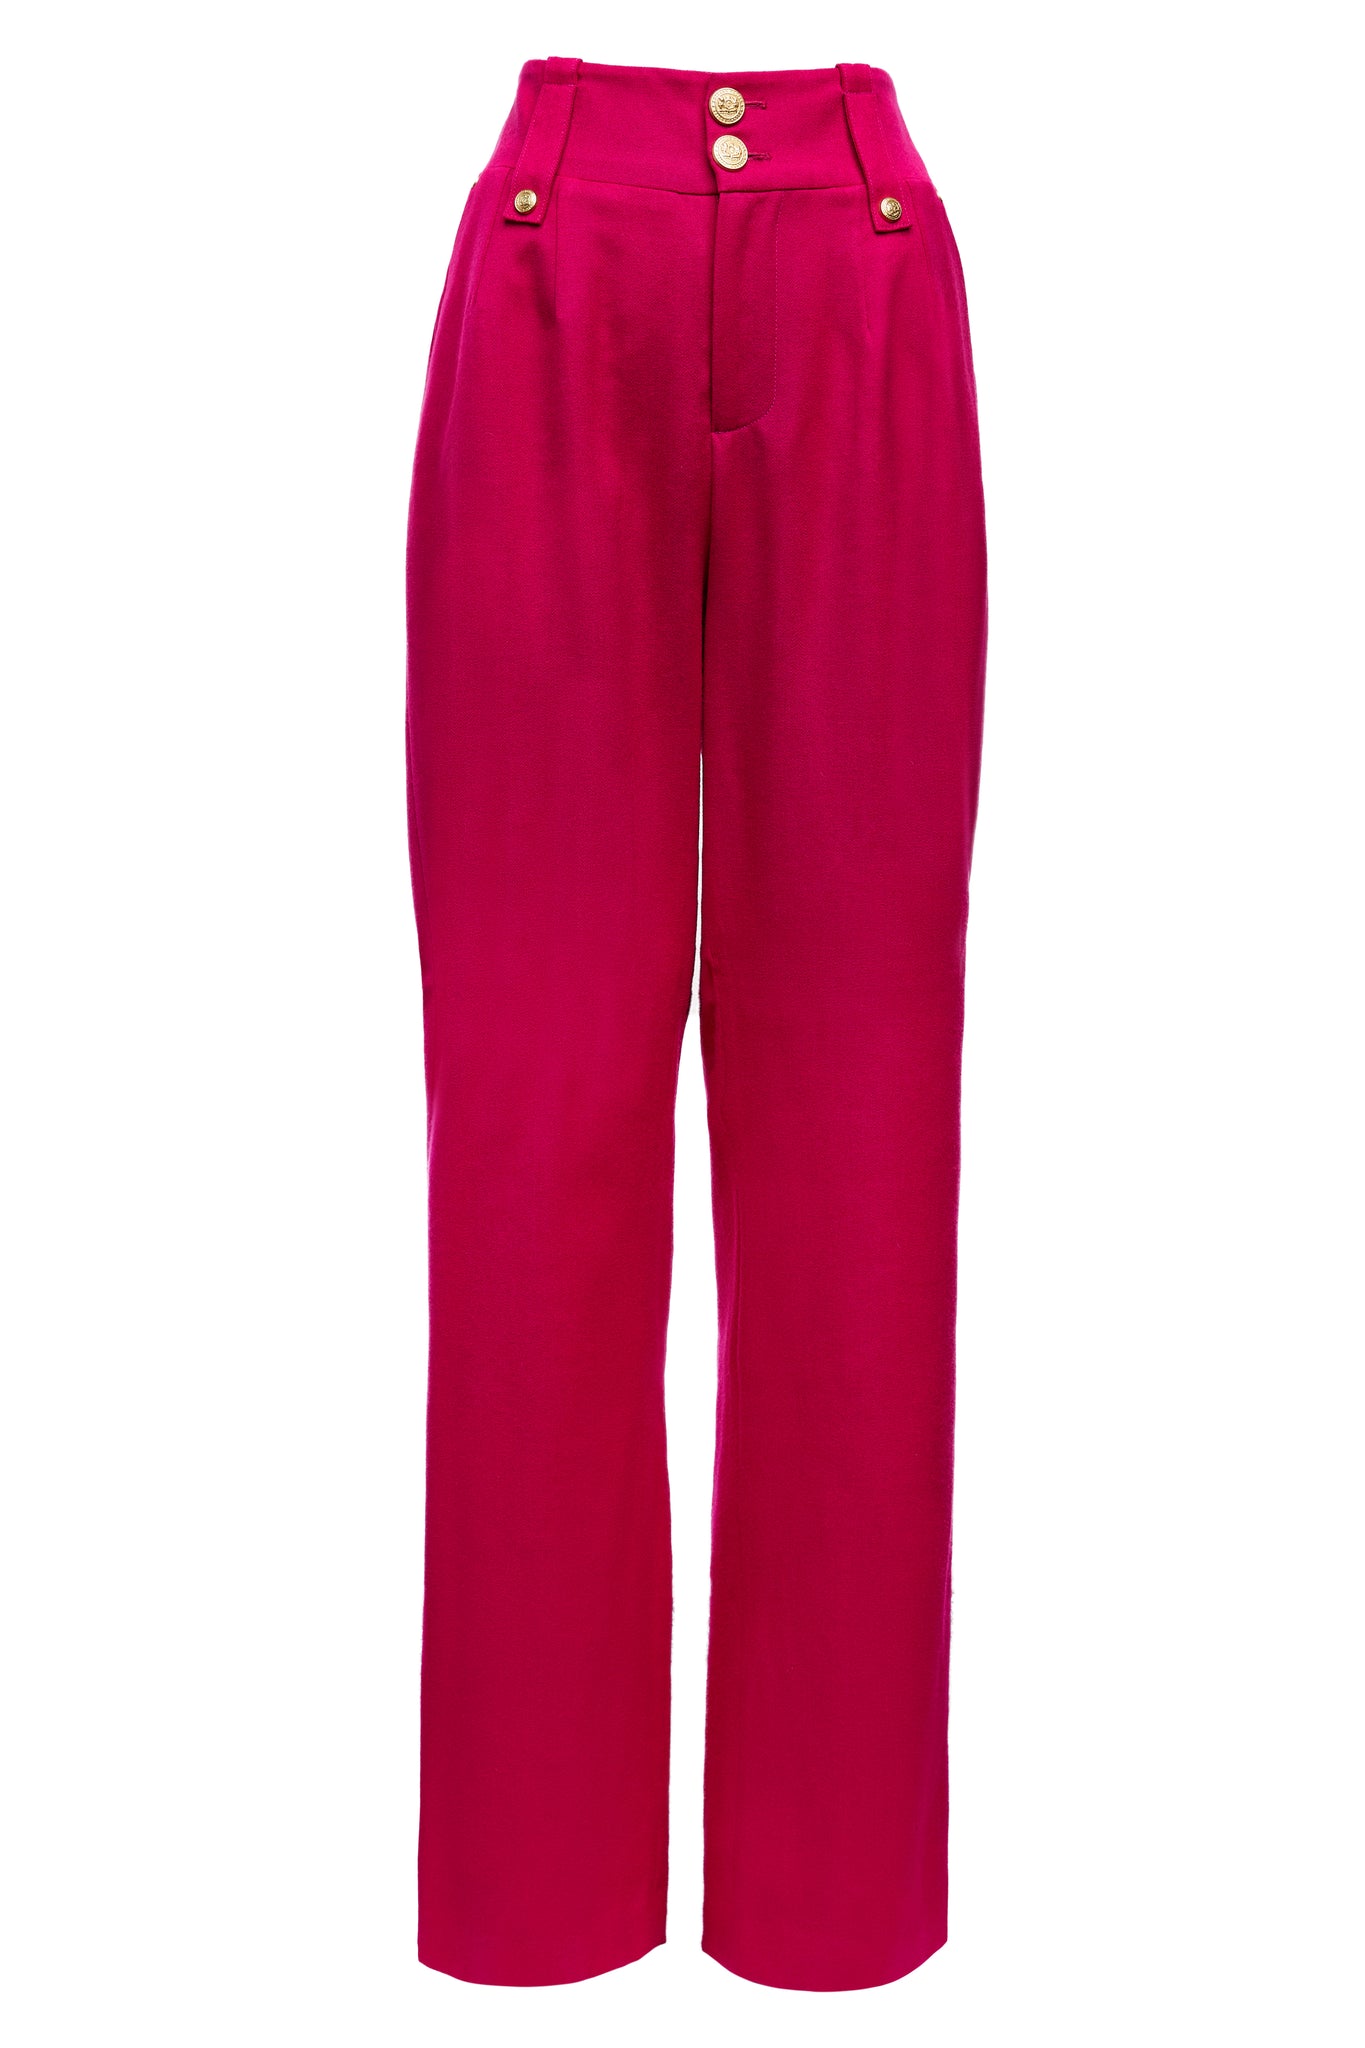 The Hot Pink Barathea Suit